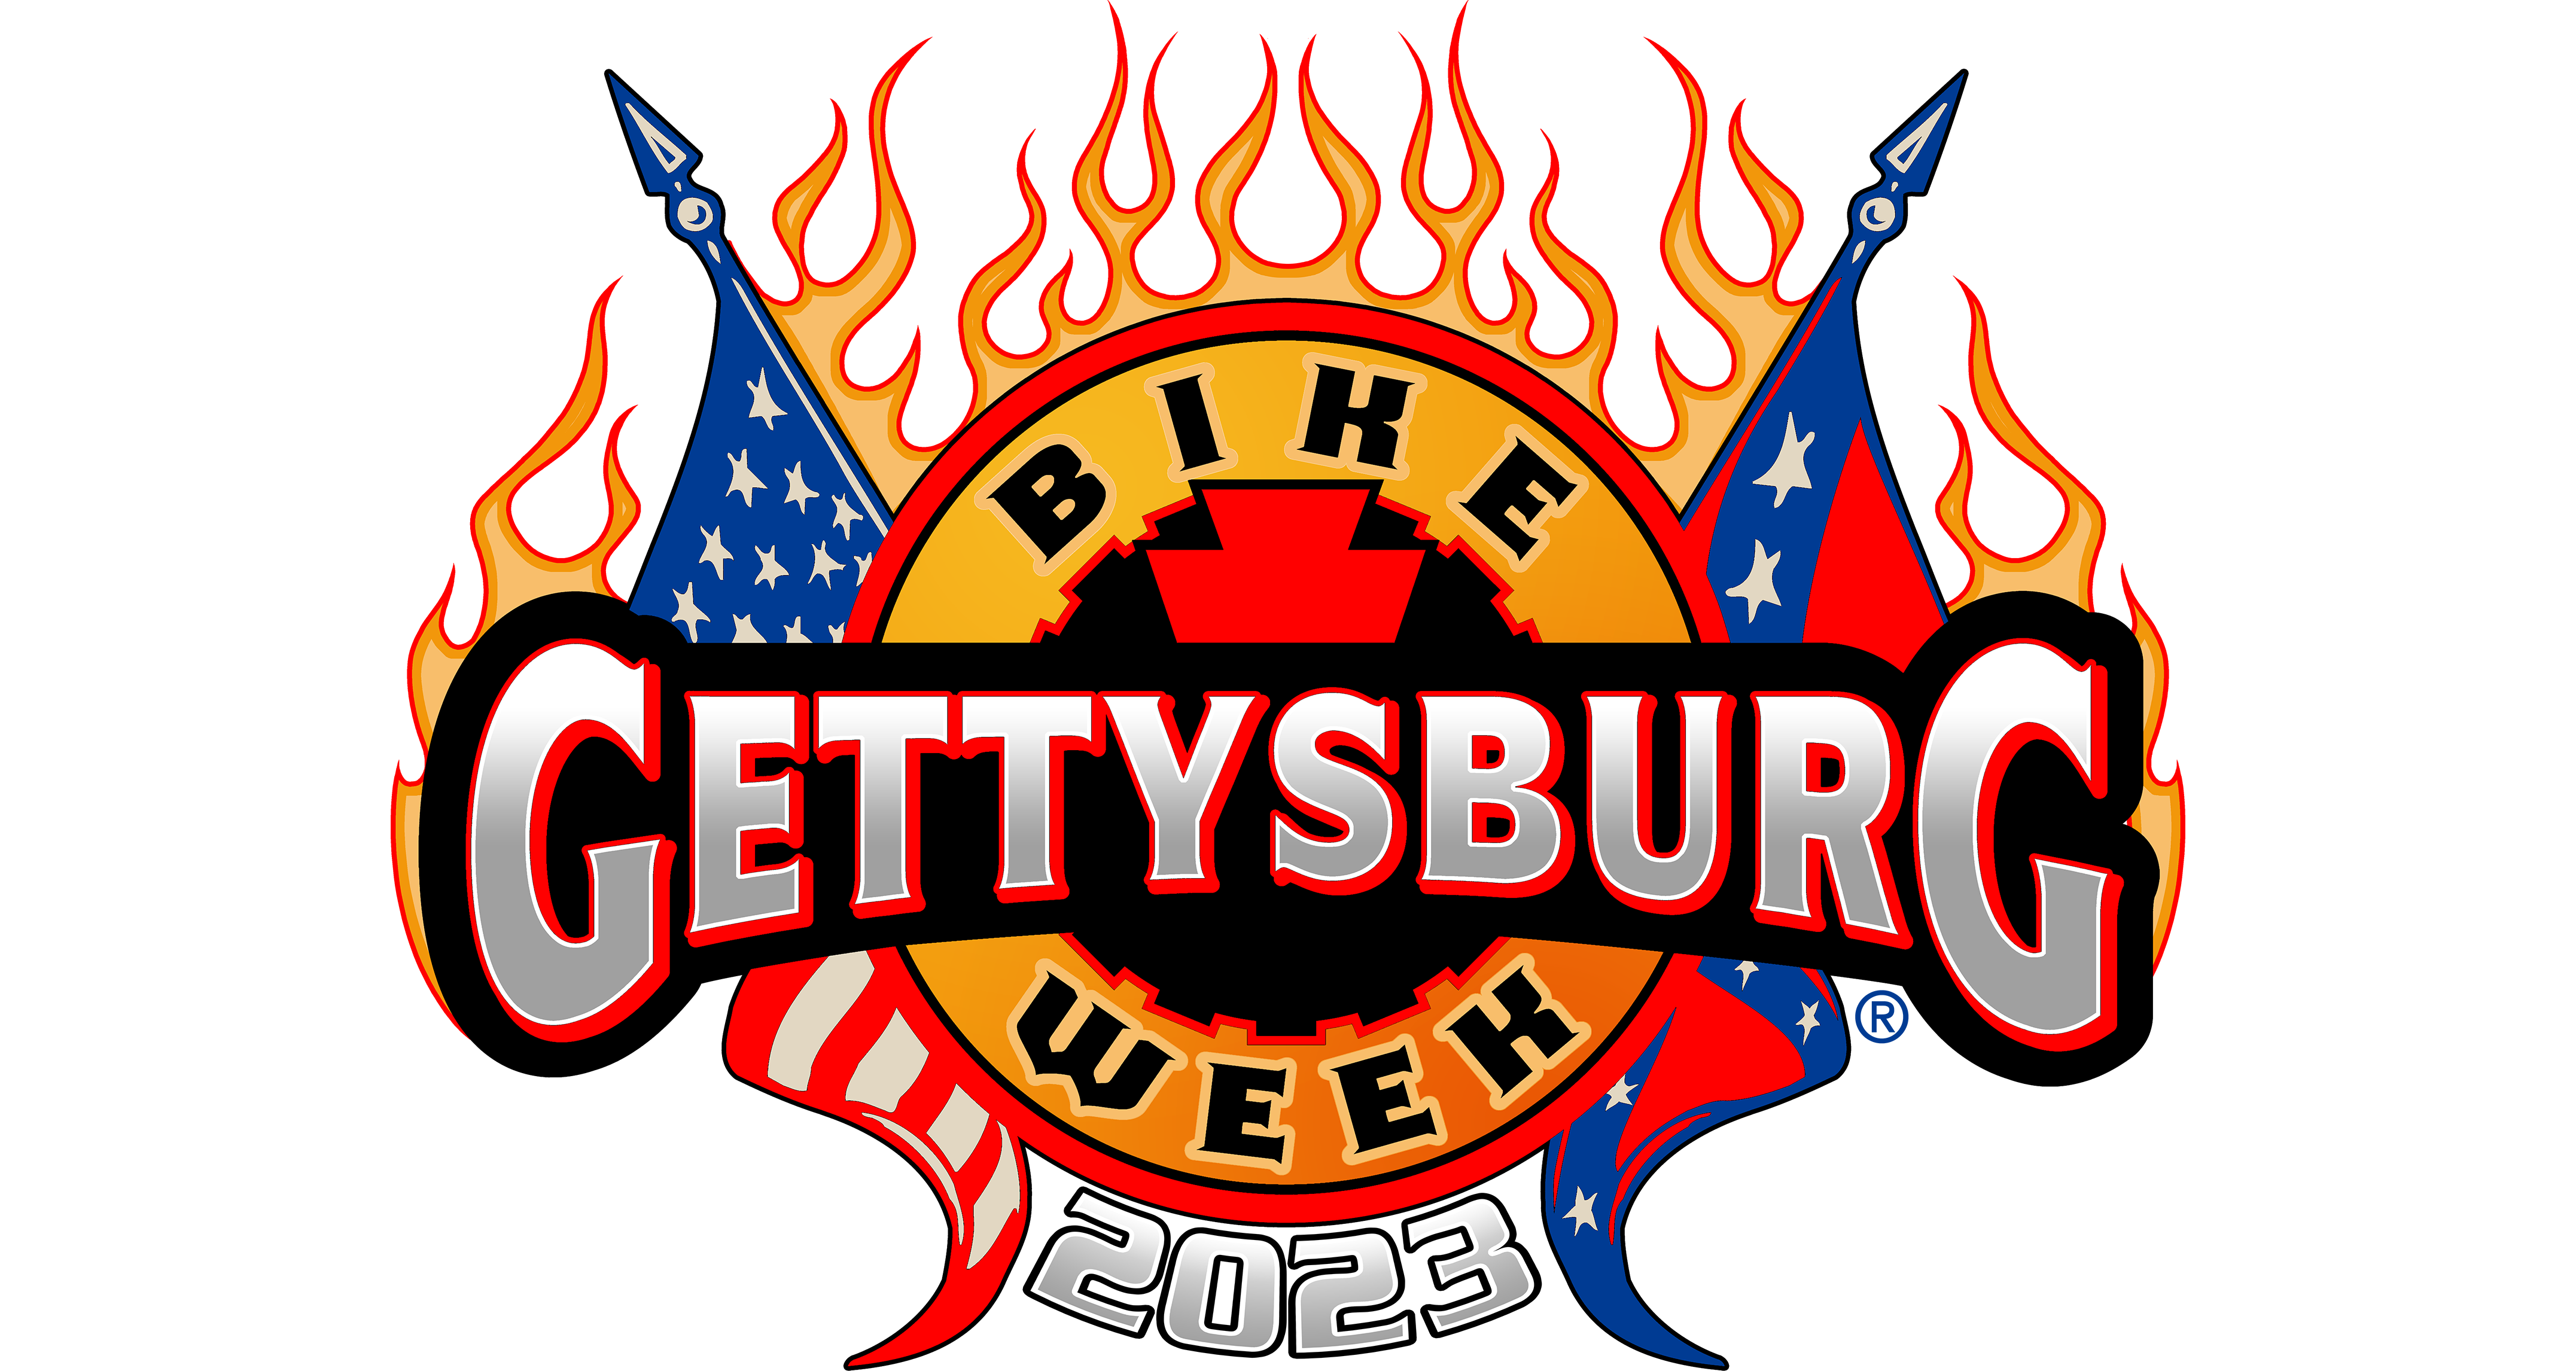 Gettysburg Bike Week logo